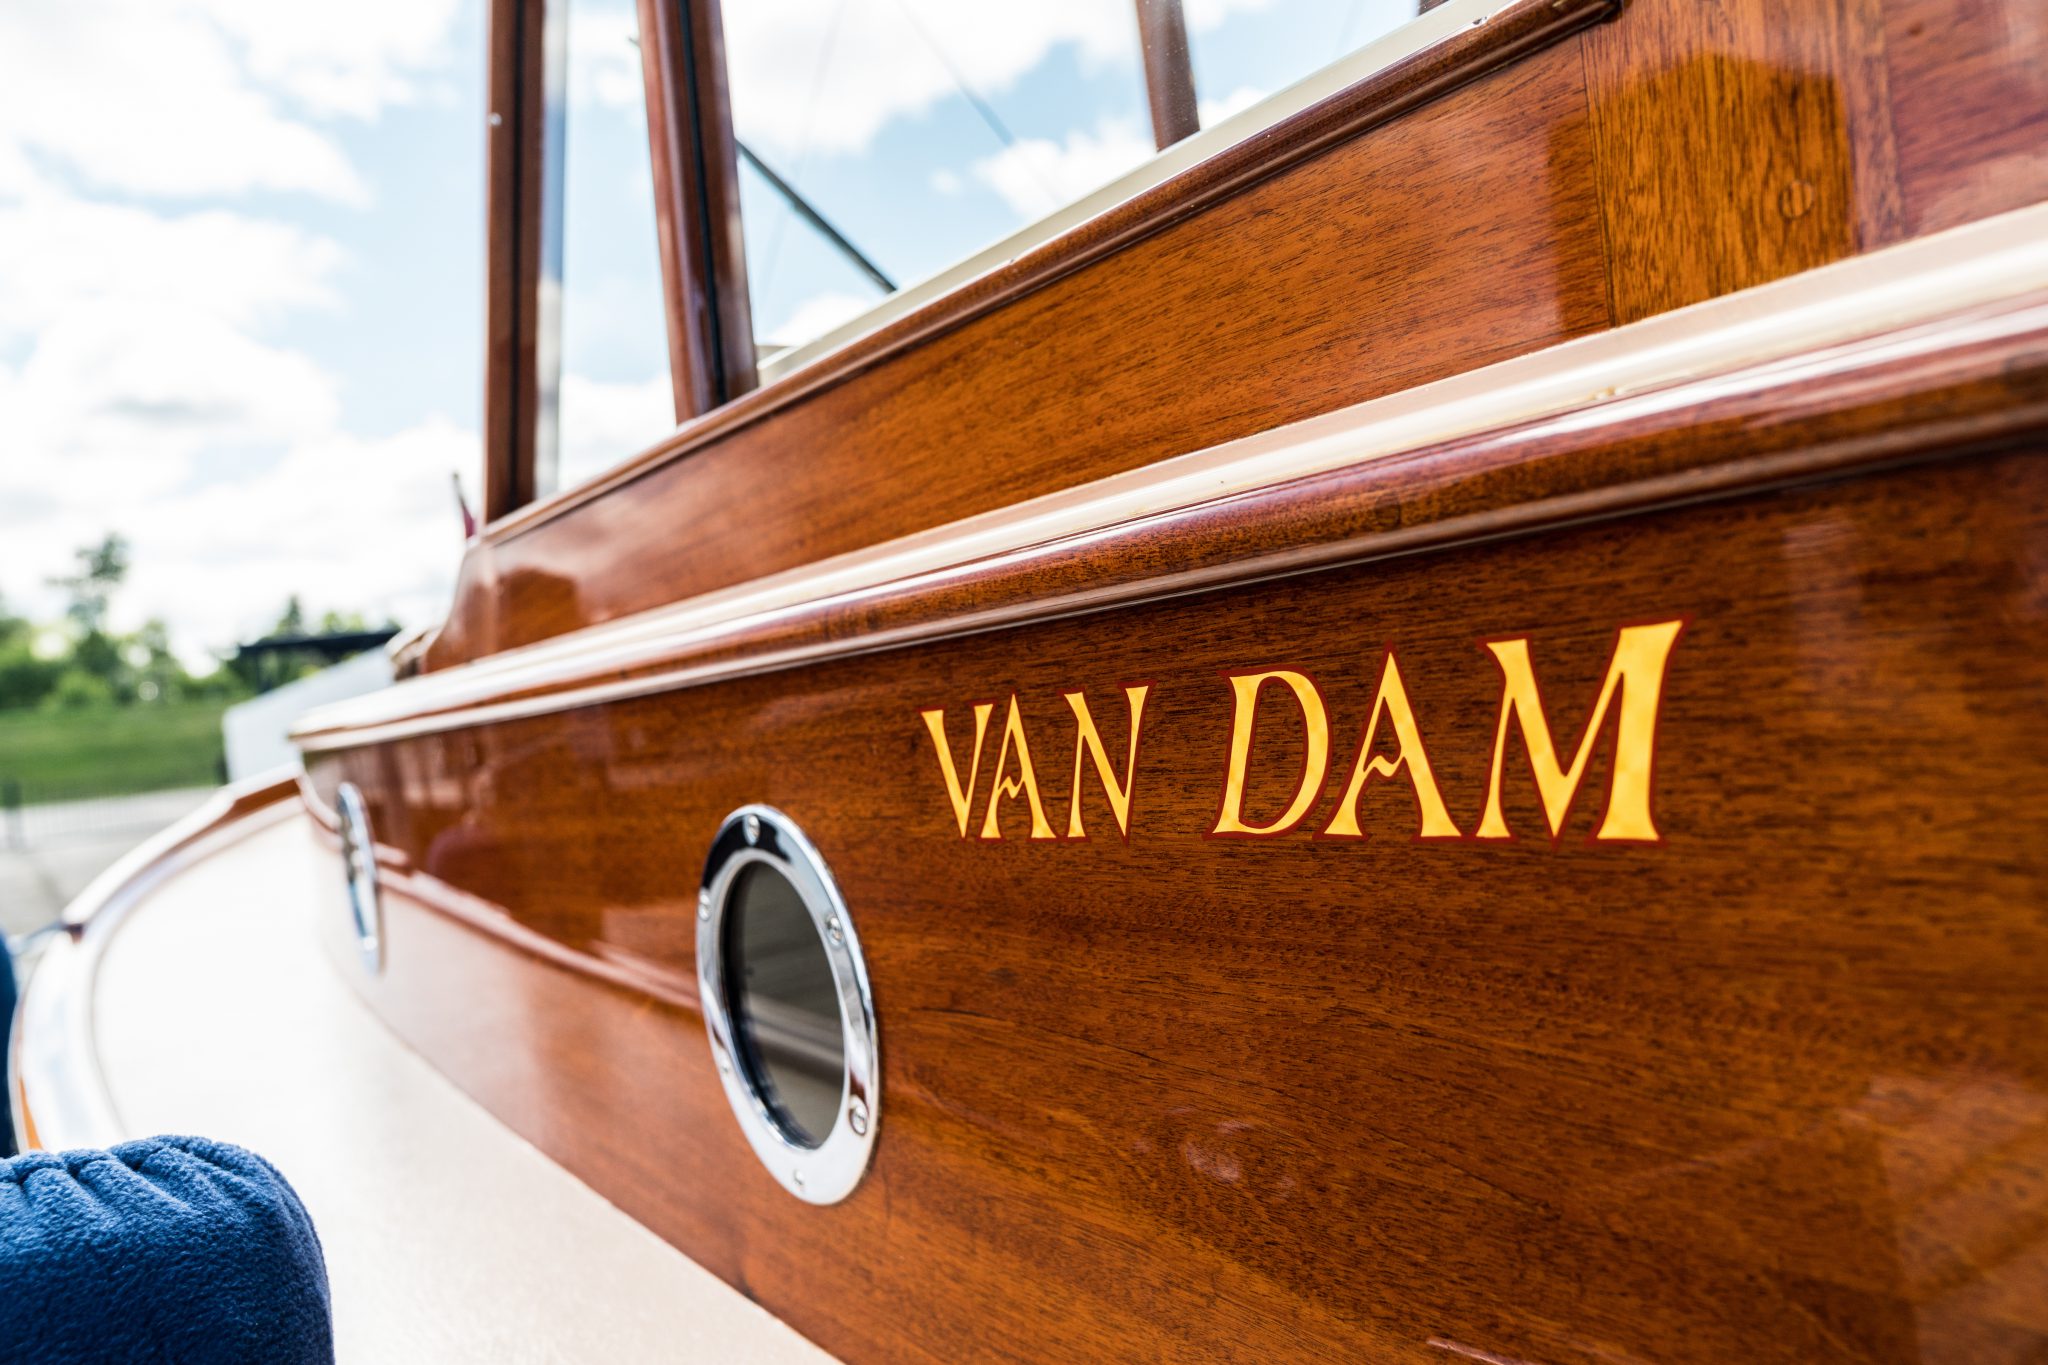 Stunning Van Dam craftsmanship